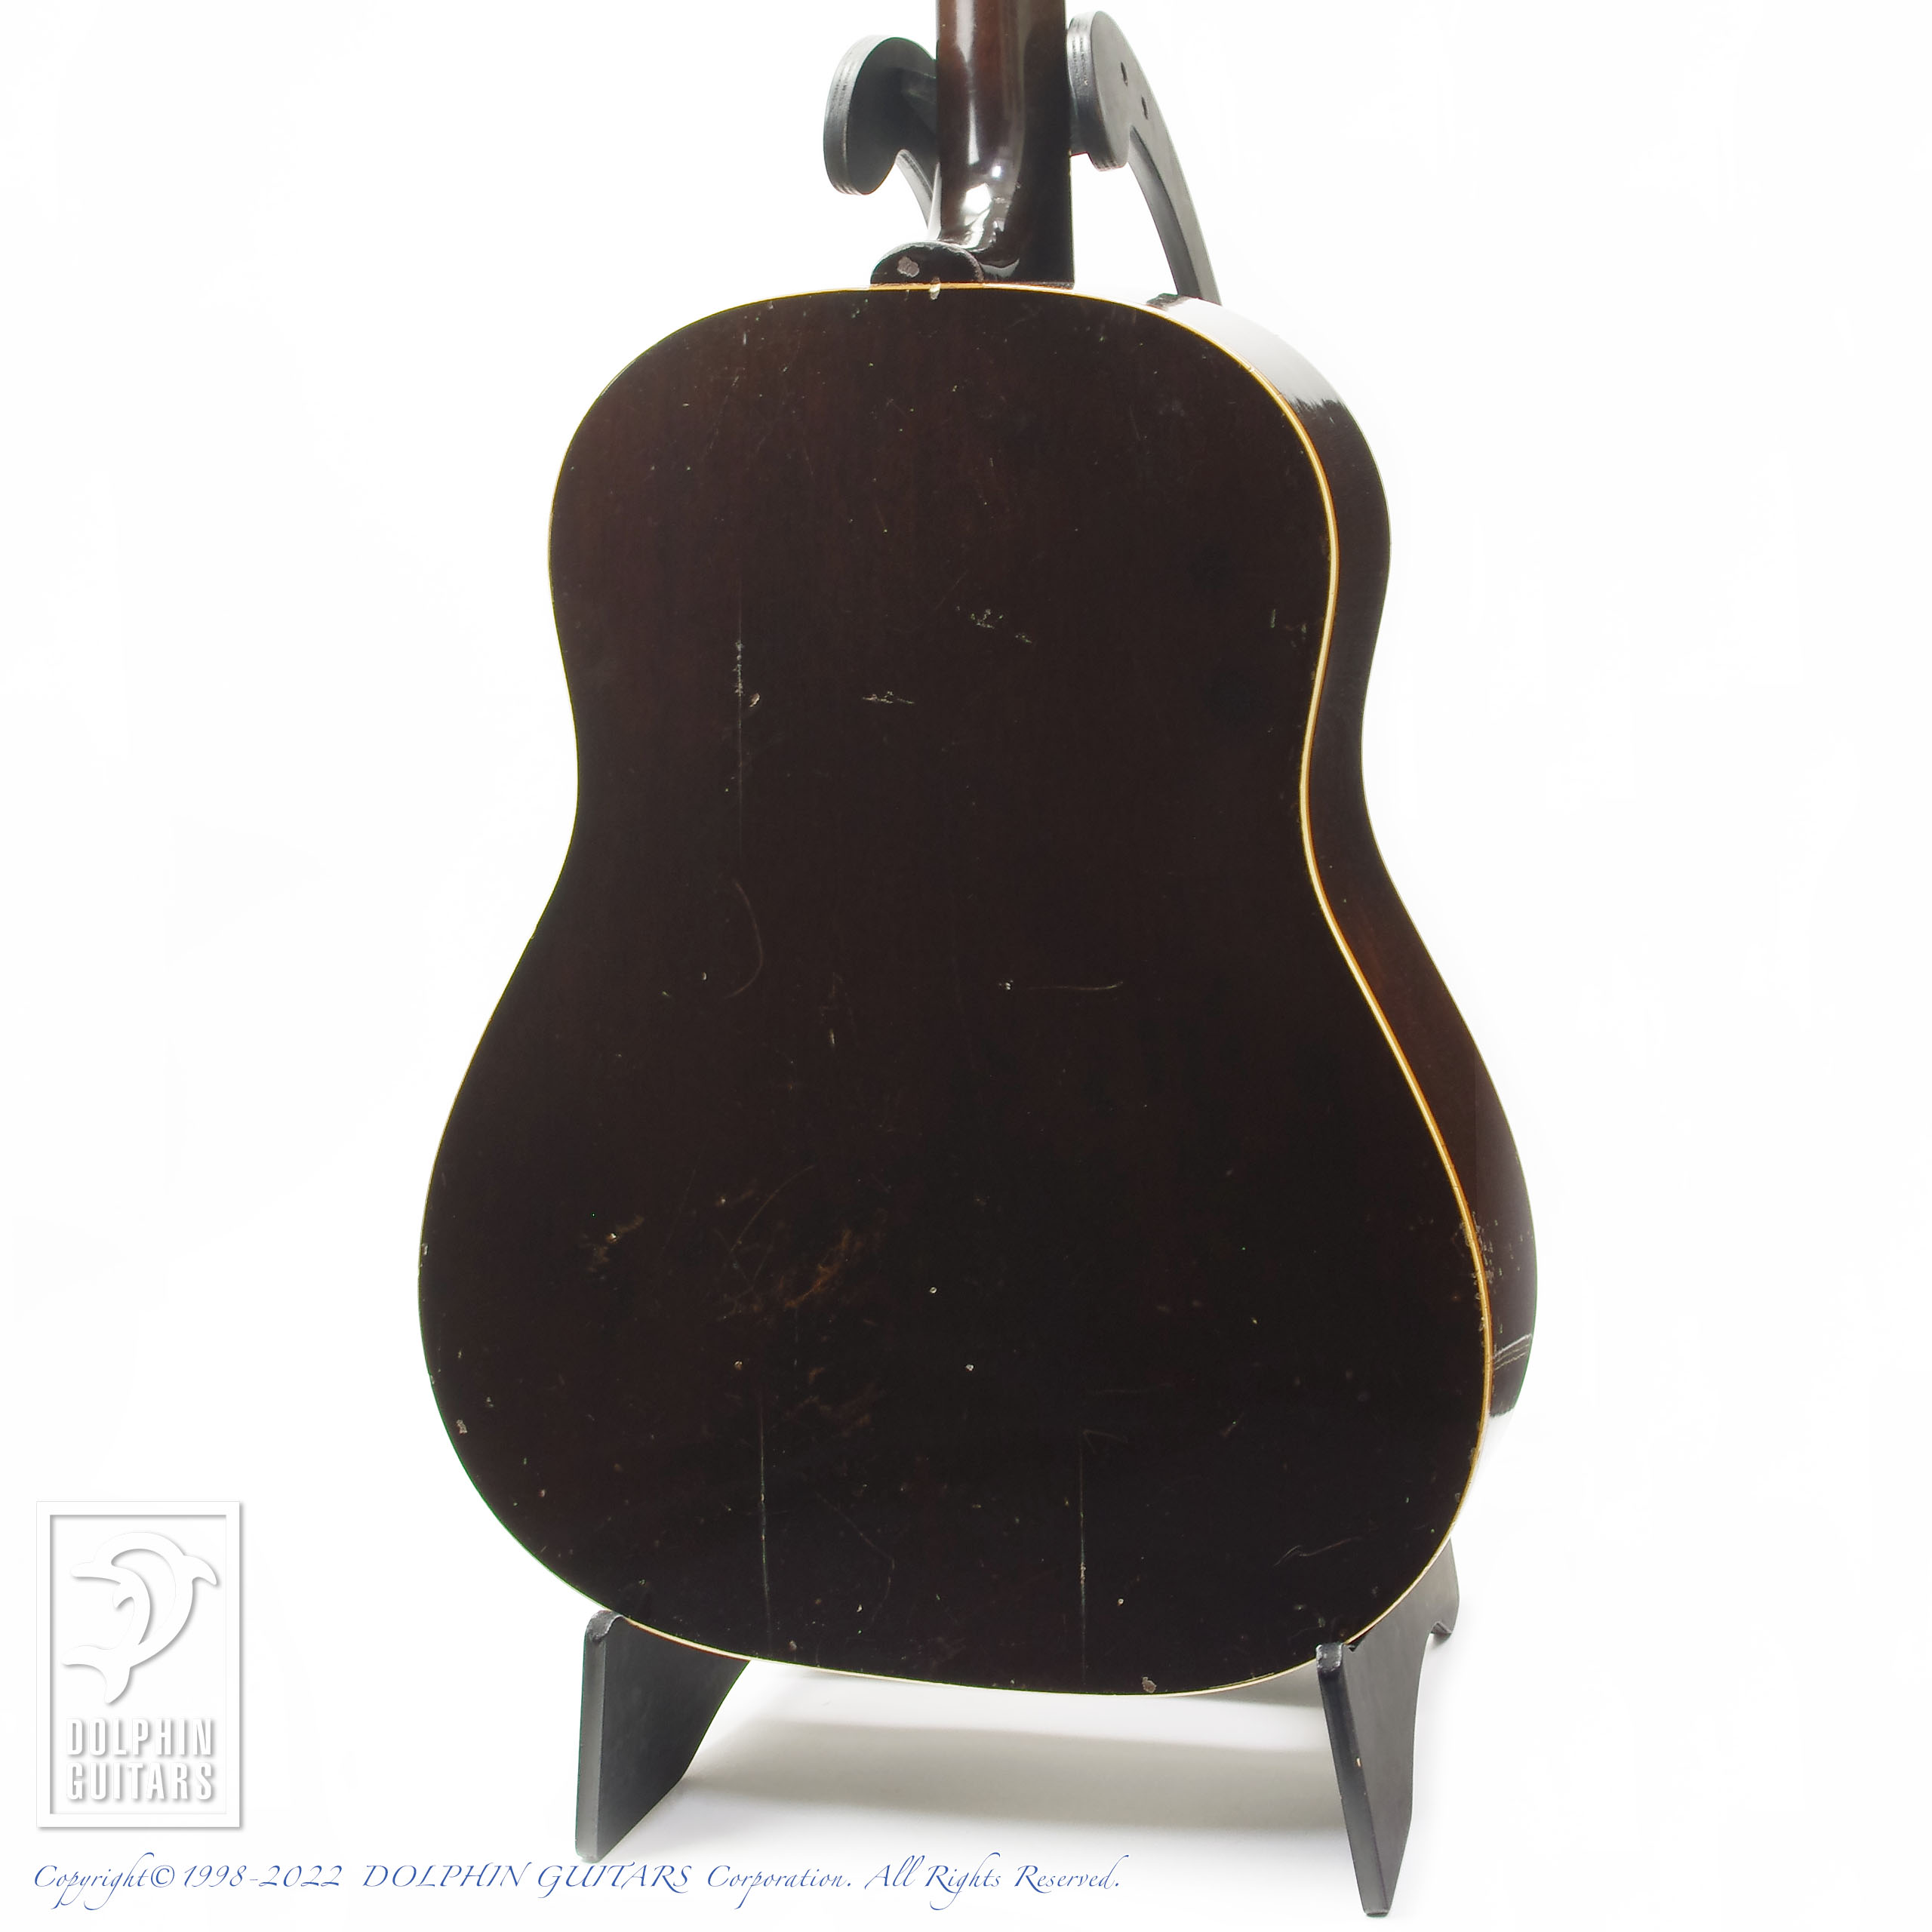 Gibson J-45|ドルフィンギターズ